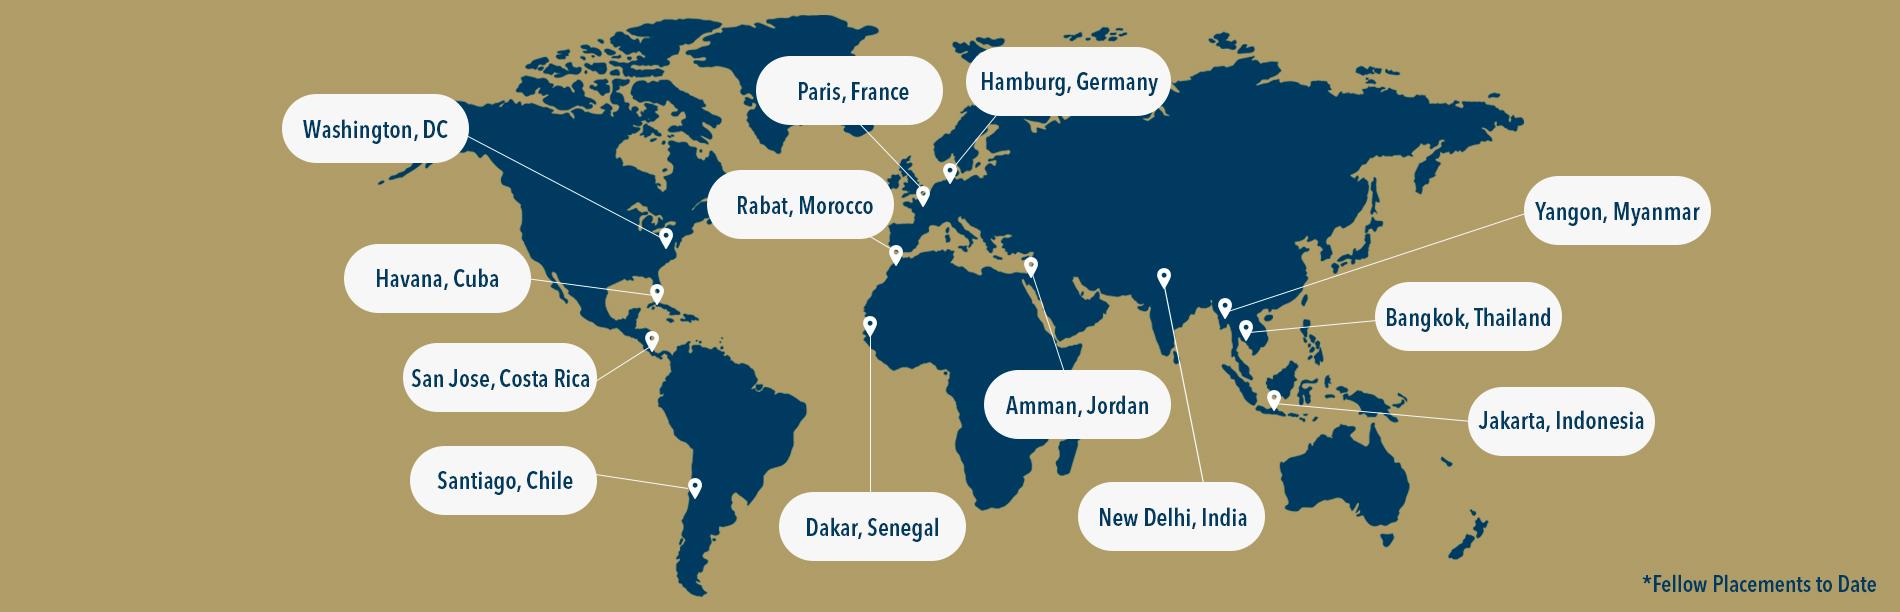 world map labeled with places where GW UNESCO Fellows have been placed, including: Washington, DC; Havana; San Jose, Costa Rica; Santiago, Chile; Paris; Hamburg; Rabat, Morocco; Dakar, Senegal; Amman, Jordan; New Delhi; Bangkok; Jakarta, Indonesia; Yangon, Myanmar